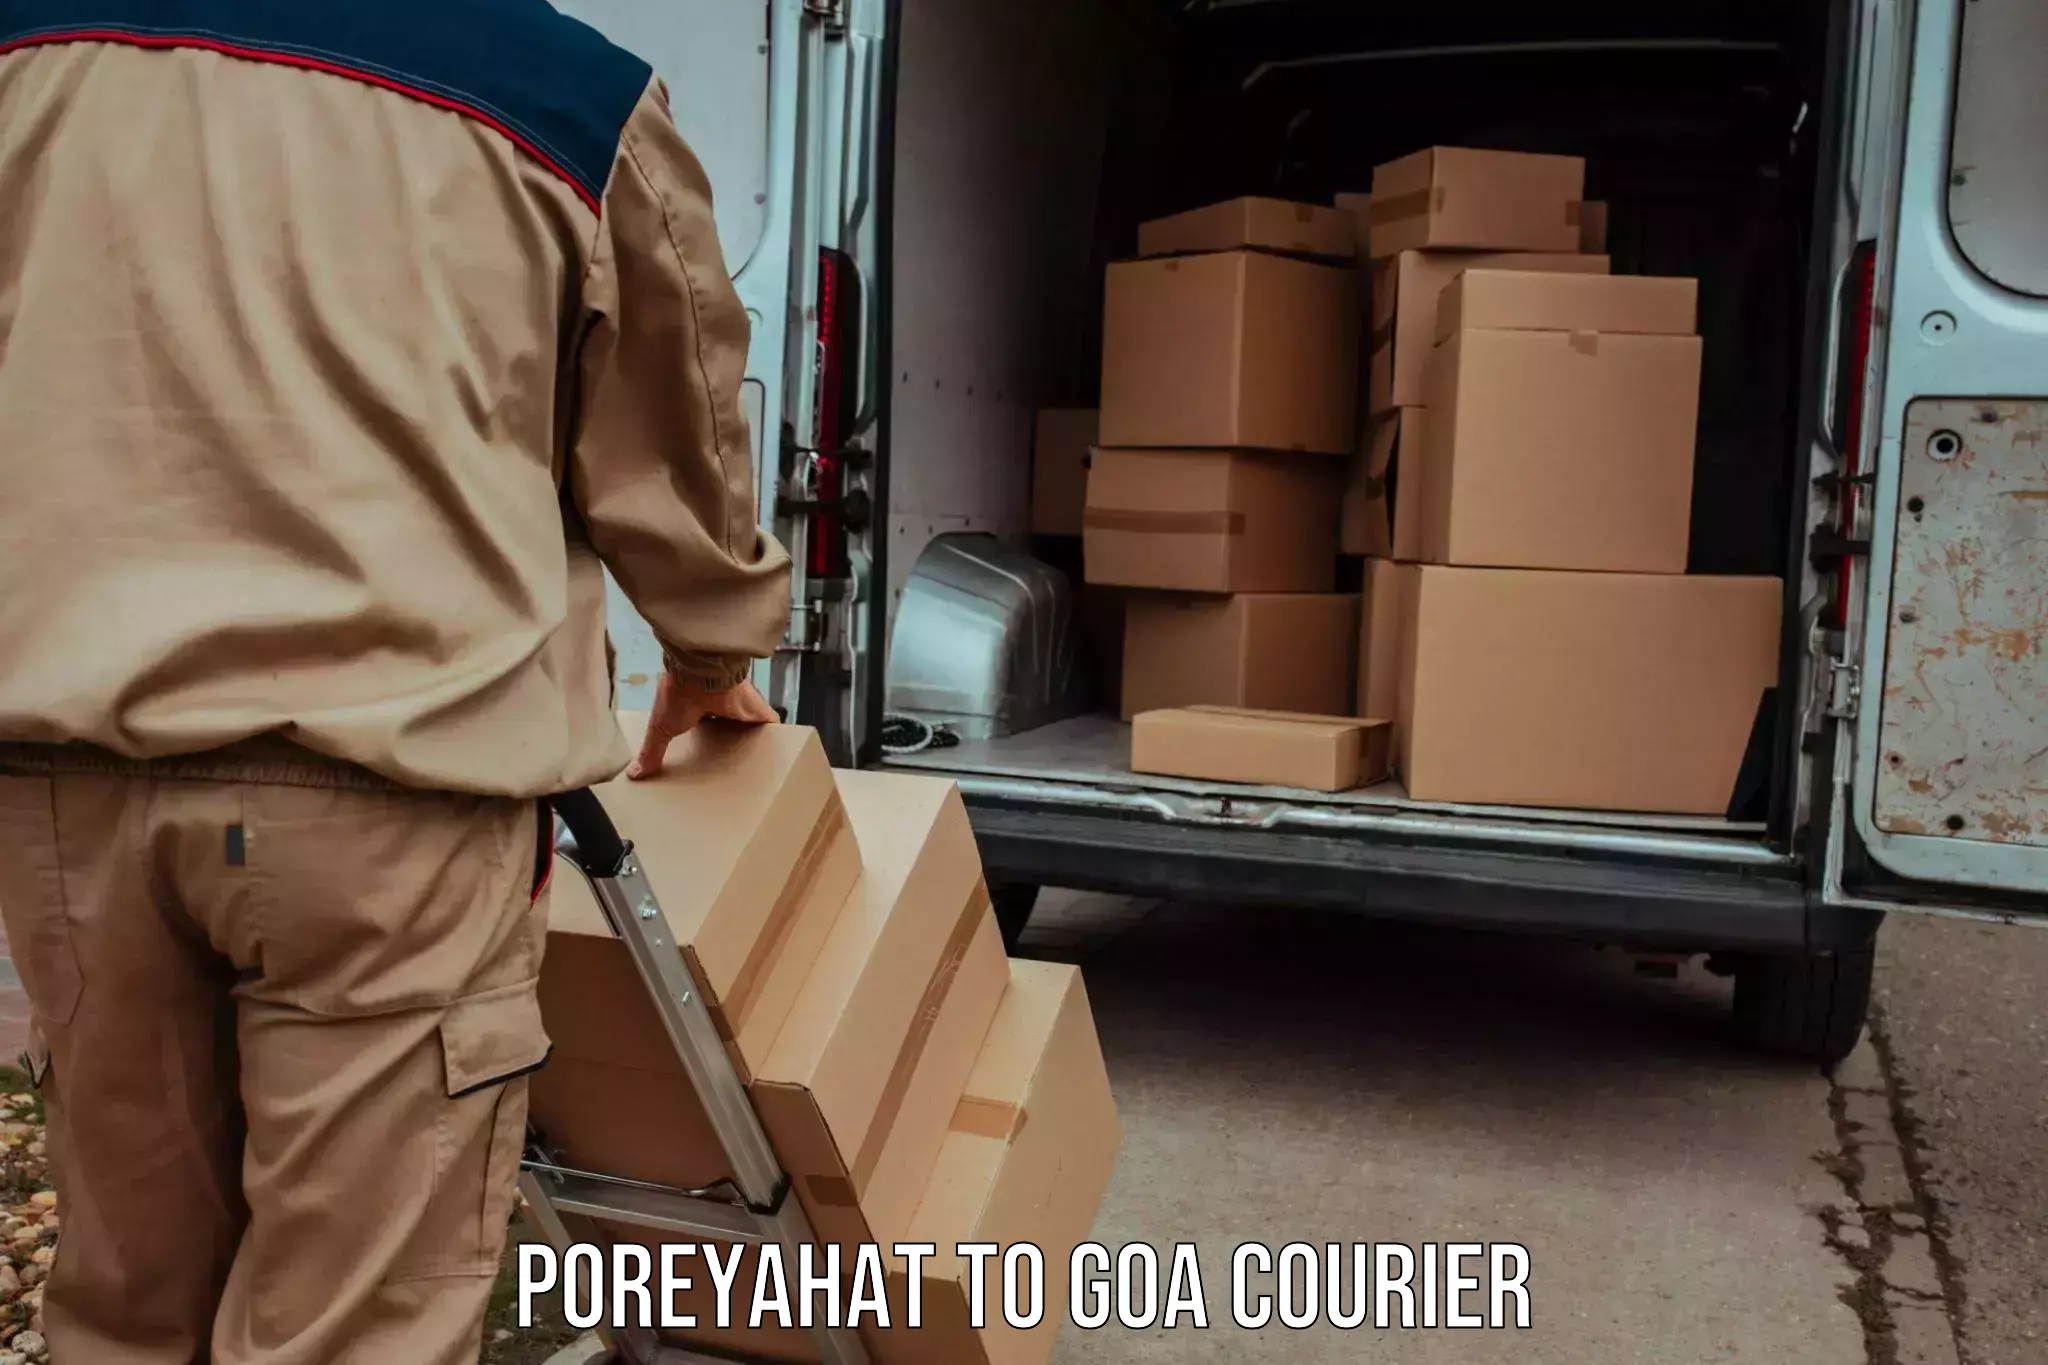 Courier service comparison in Poreyahat to Goa